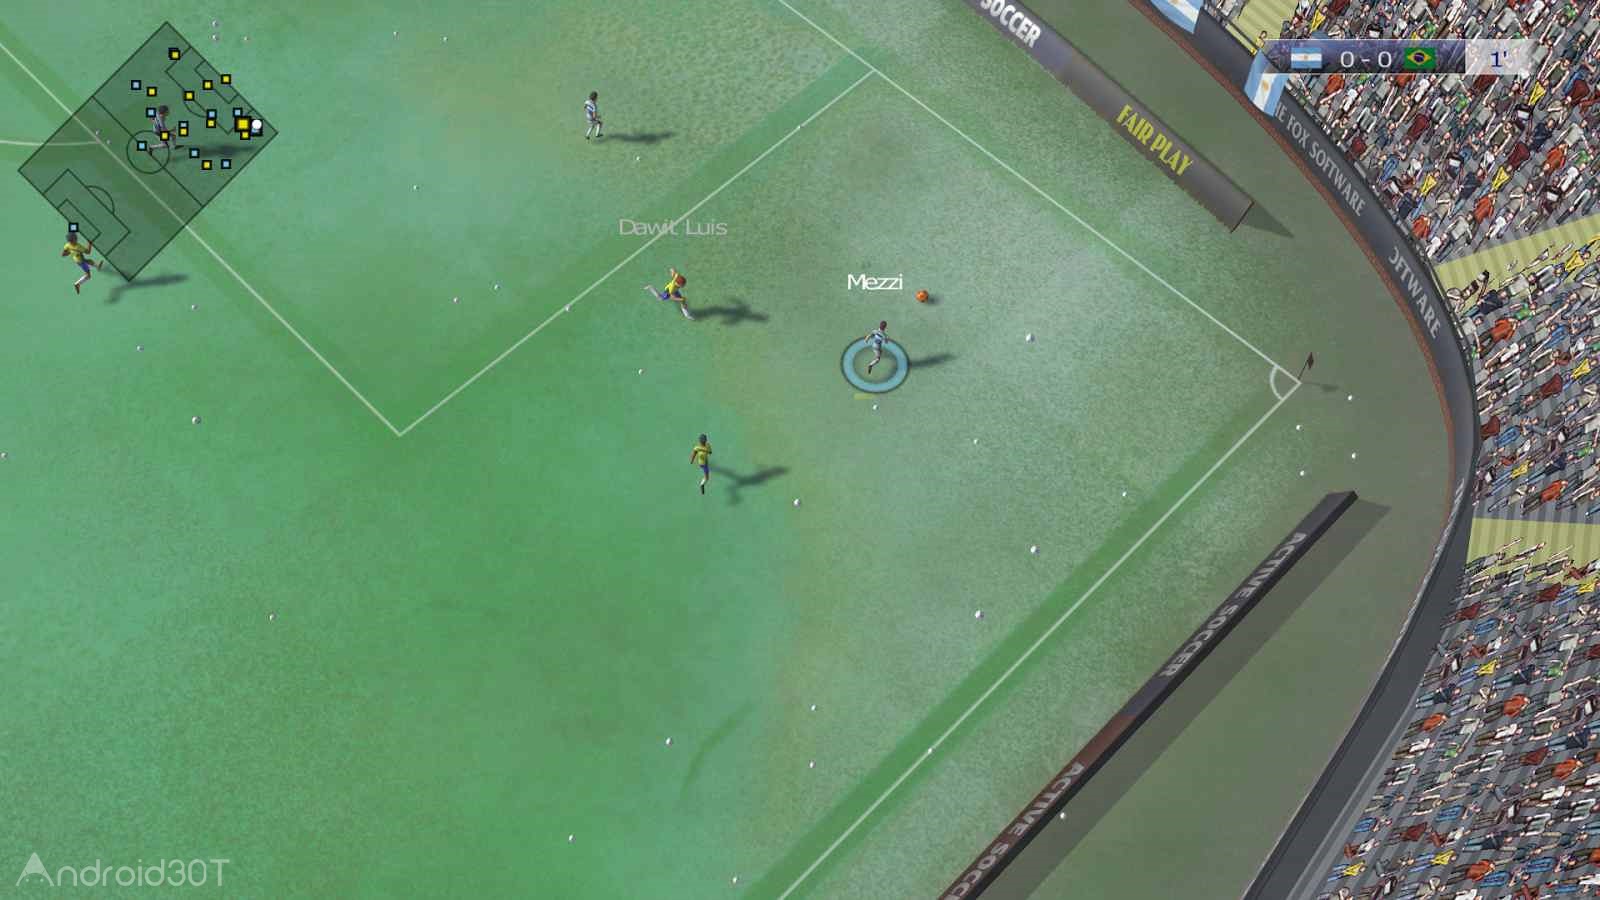 Active Soccer 2 DX 1.0.3 – بازی ورزشی فوتبال خلاقانه اندروید